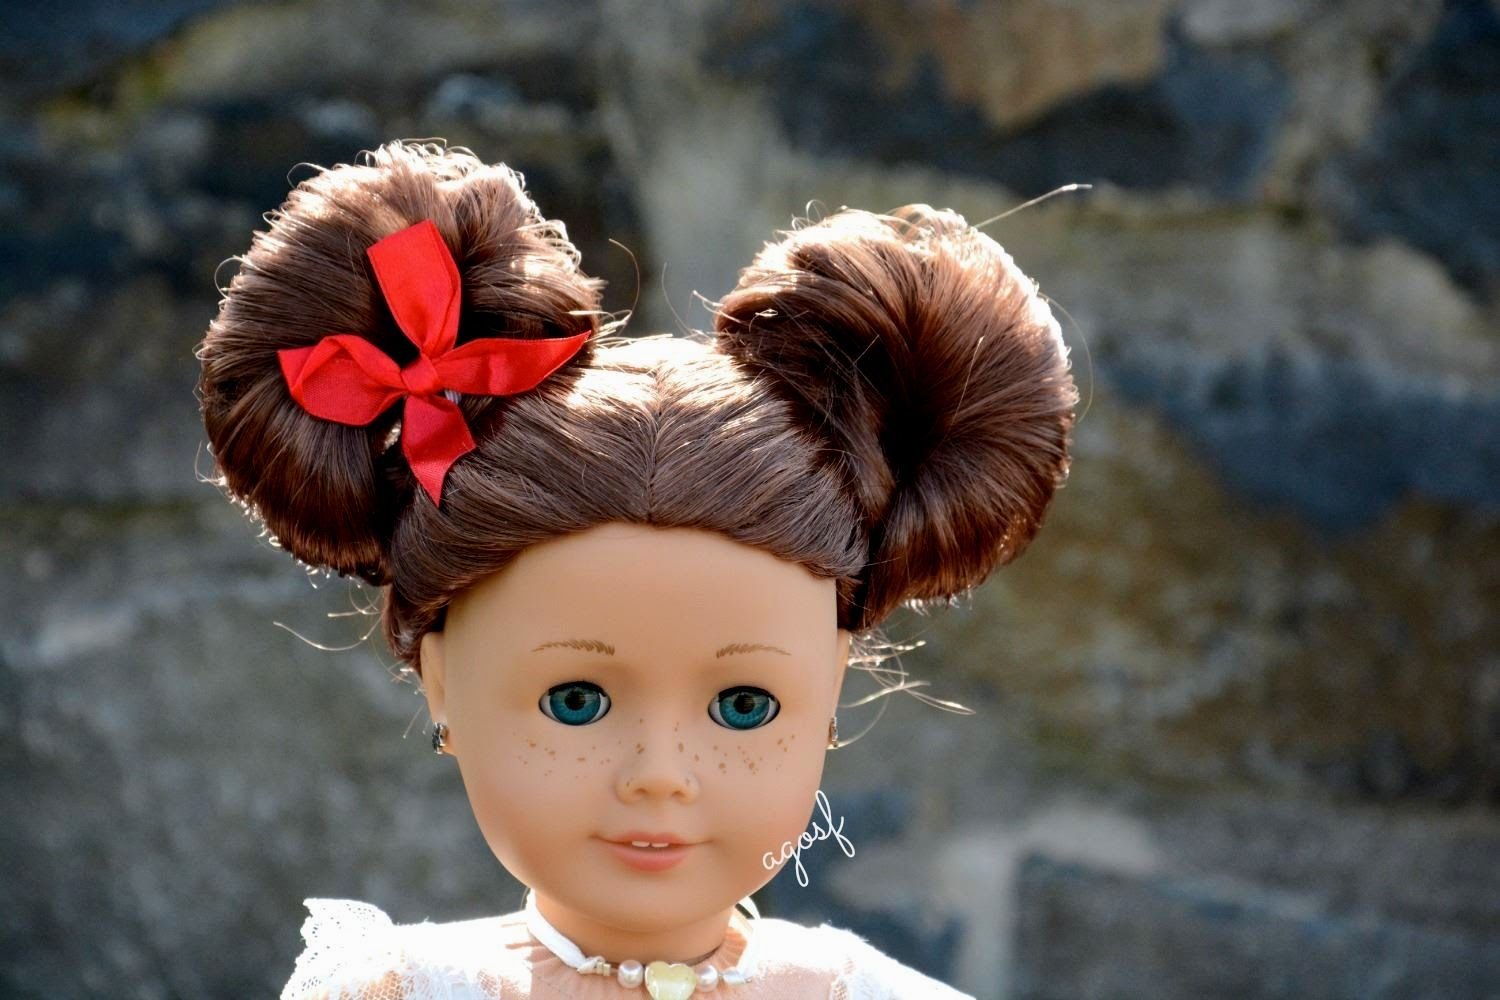 Куклы красивые волосы. Причëски Американ гëрл. Прическа Американ герл. Прически для куколок. Красивые куклы.